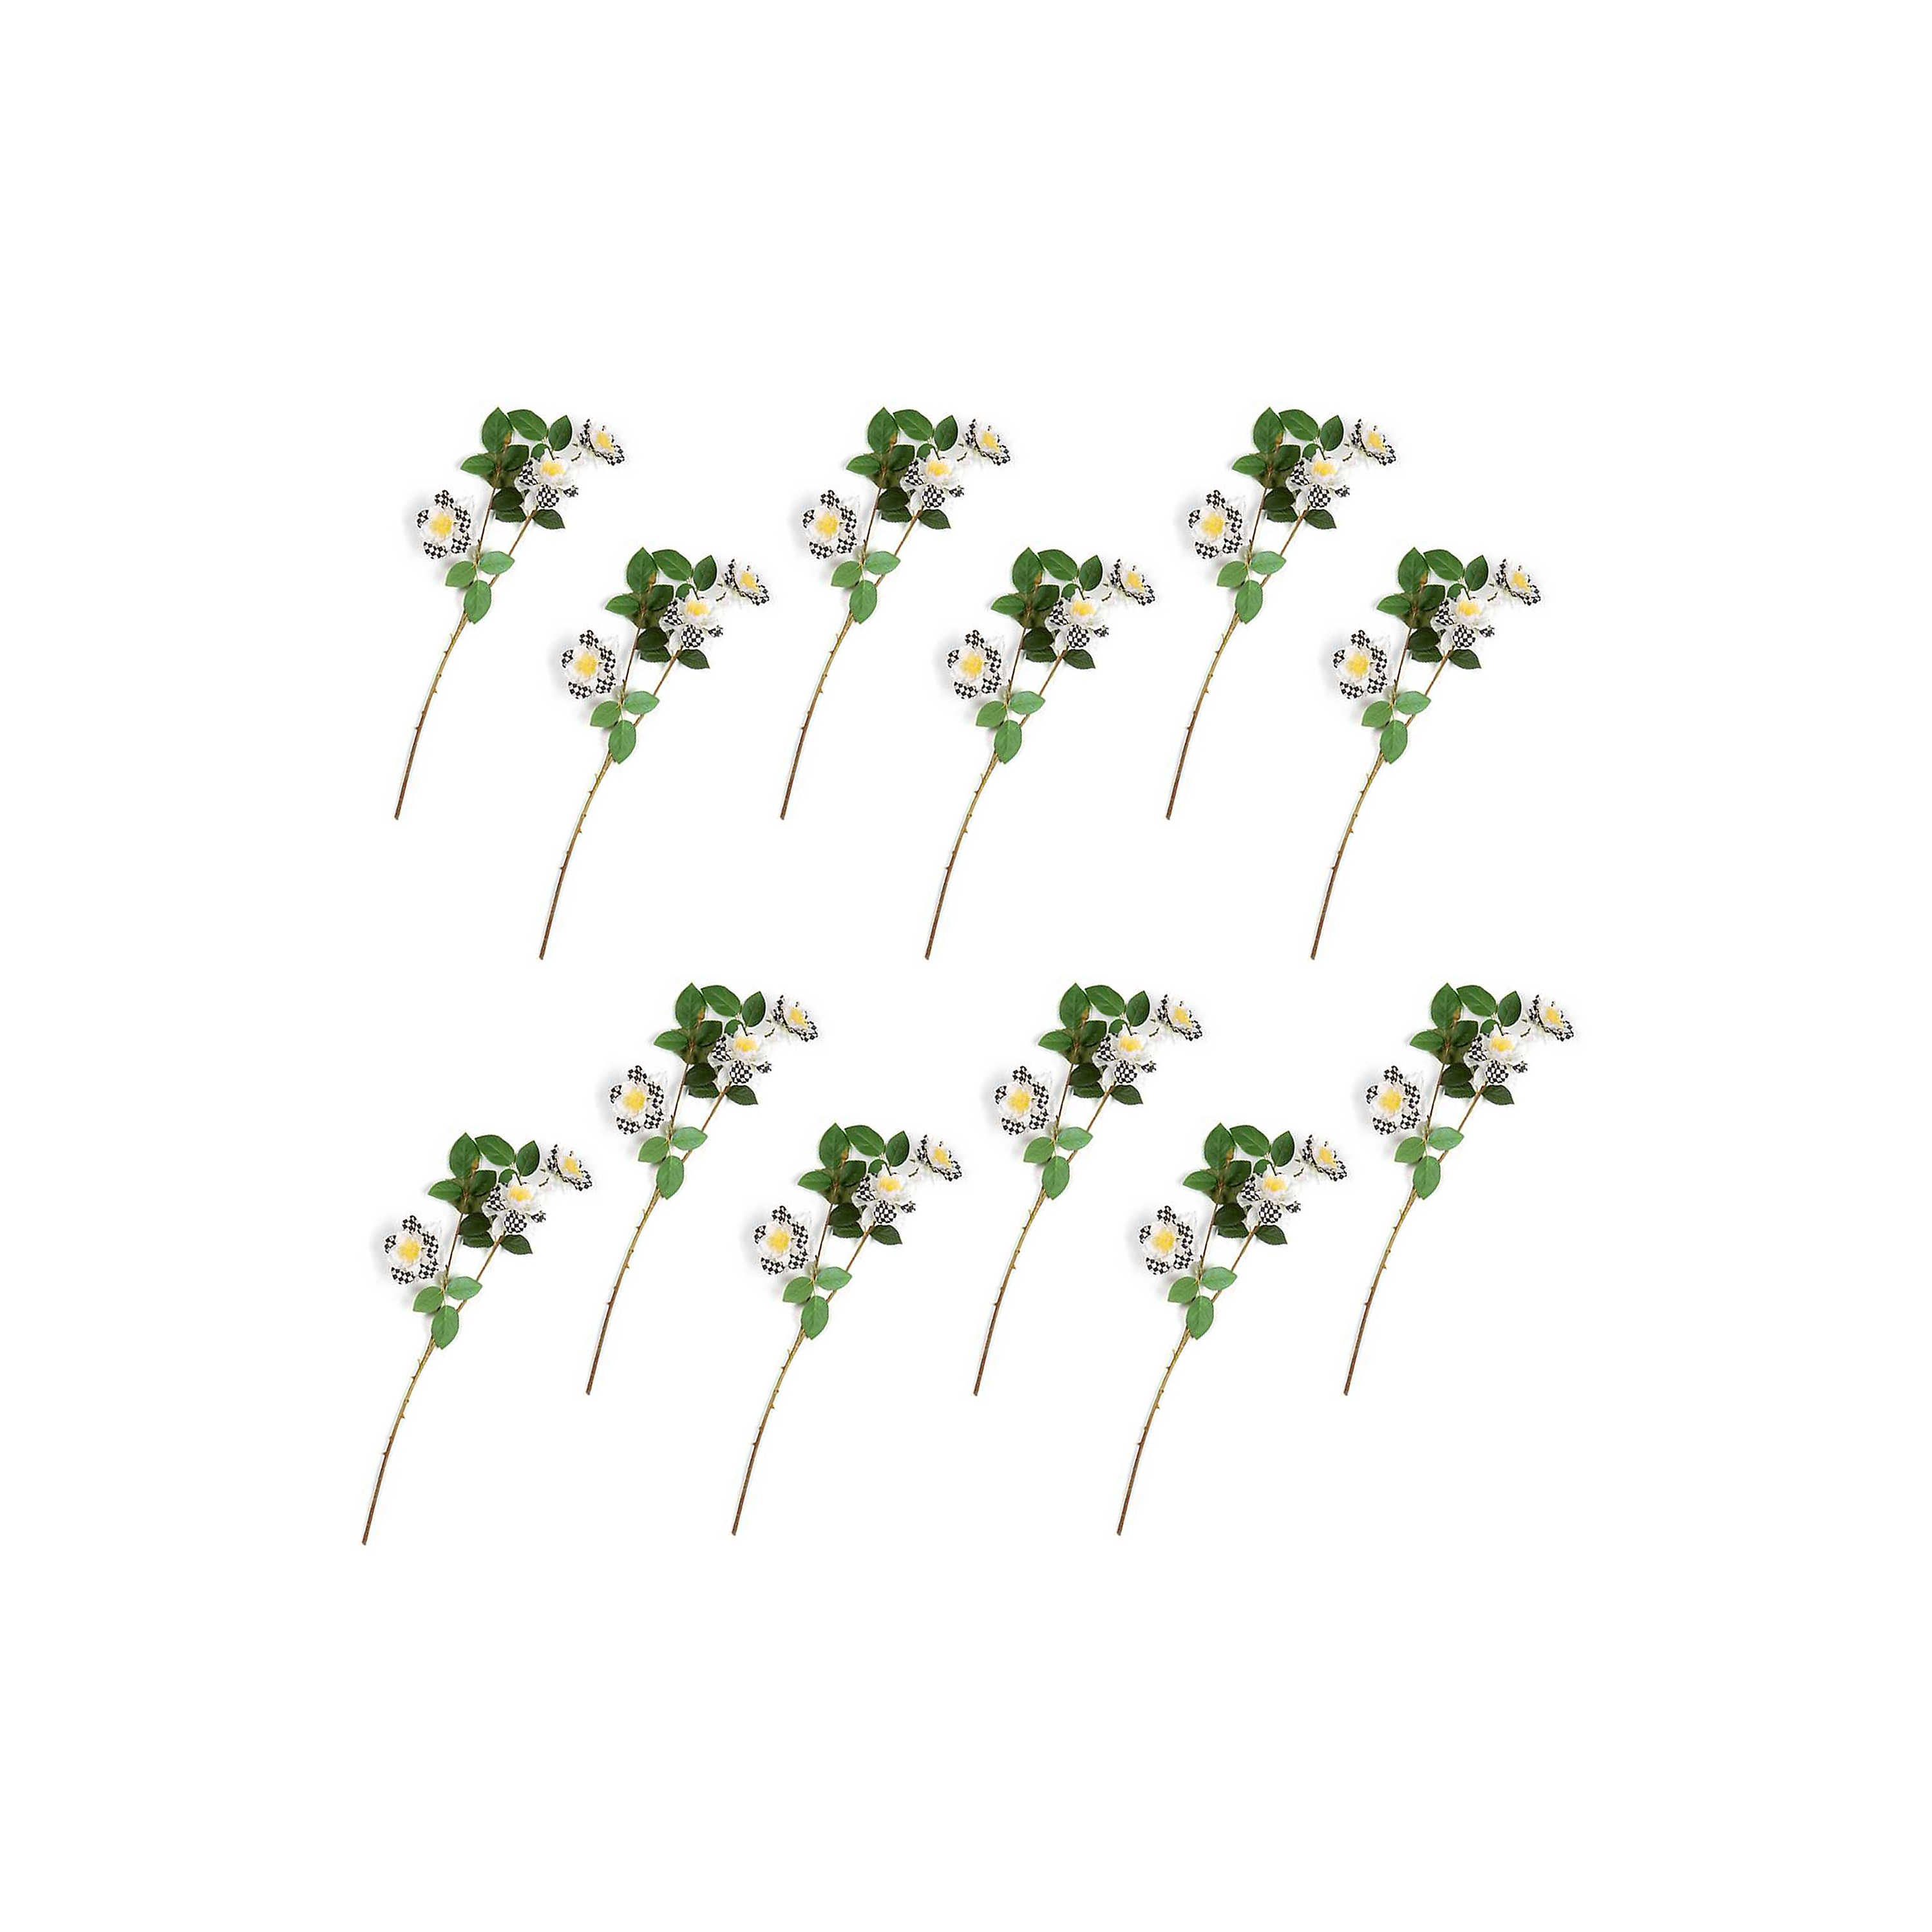 Wild Rose Spray Bouquet - Cream - Set of 12 mackenzie-childs Panama 0